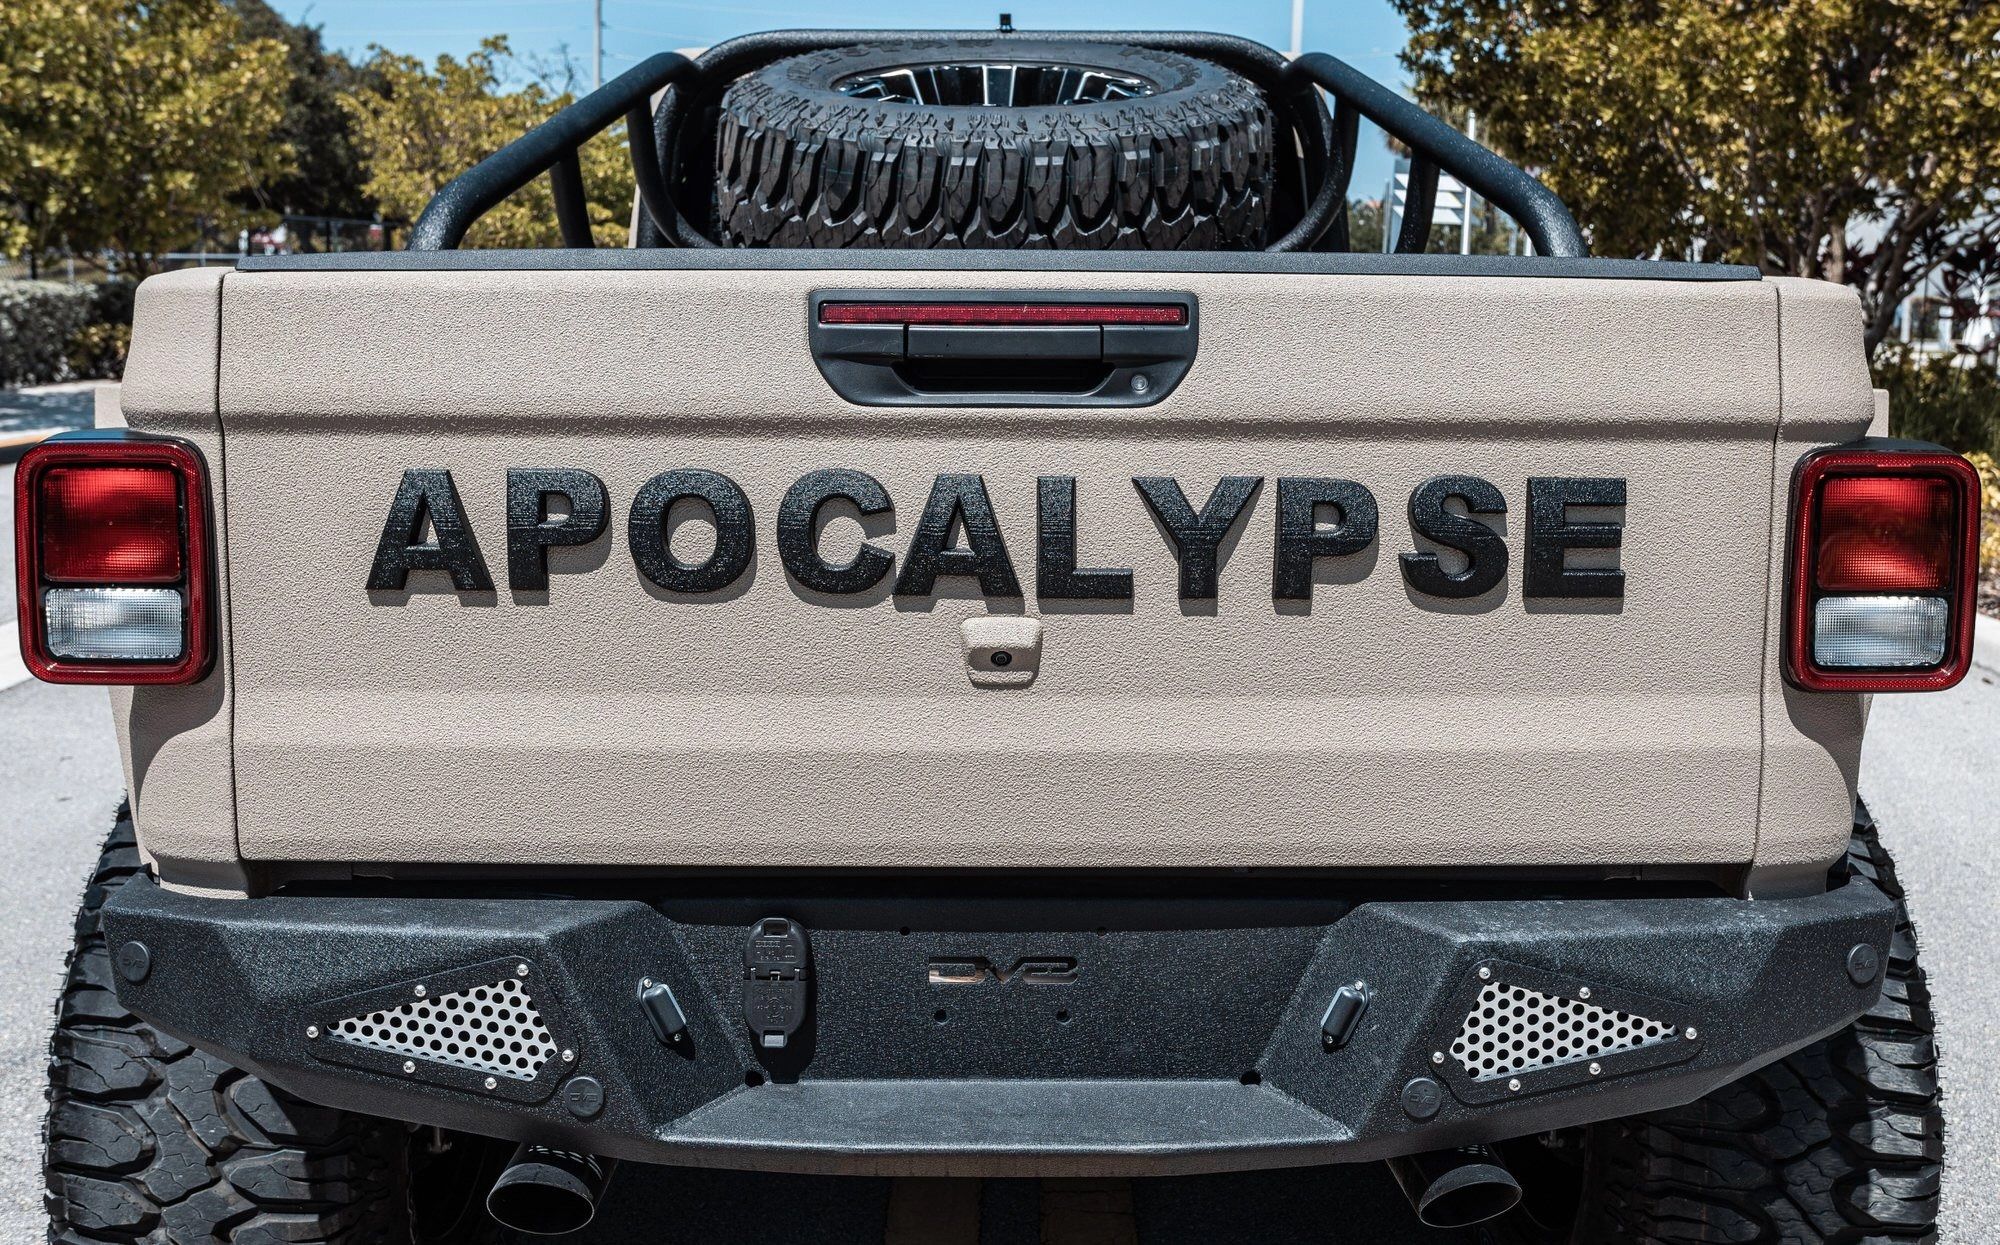 The Apocalypse Sinister 6